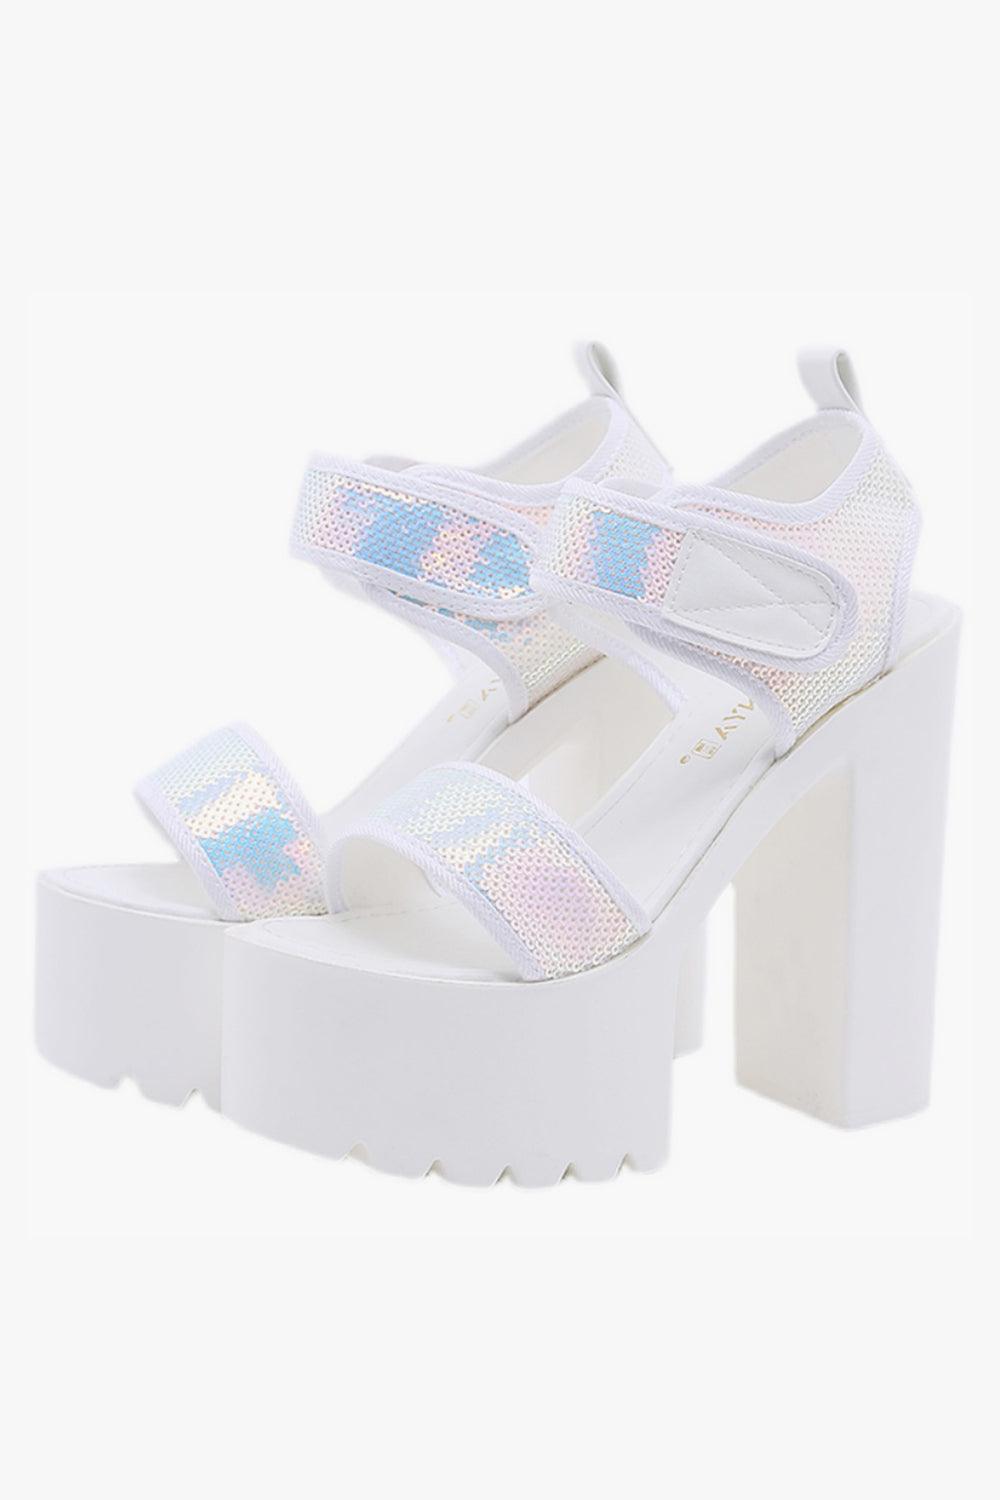 Holographic Mesh High Heel Platform Shoes - Aesthetic Clothes Shop